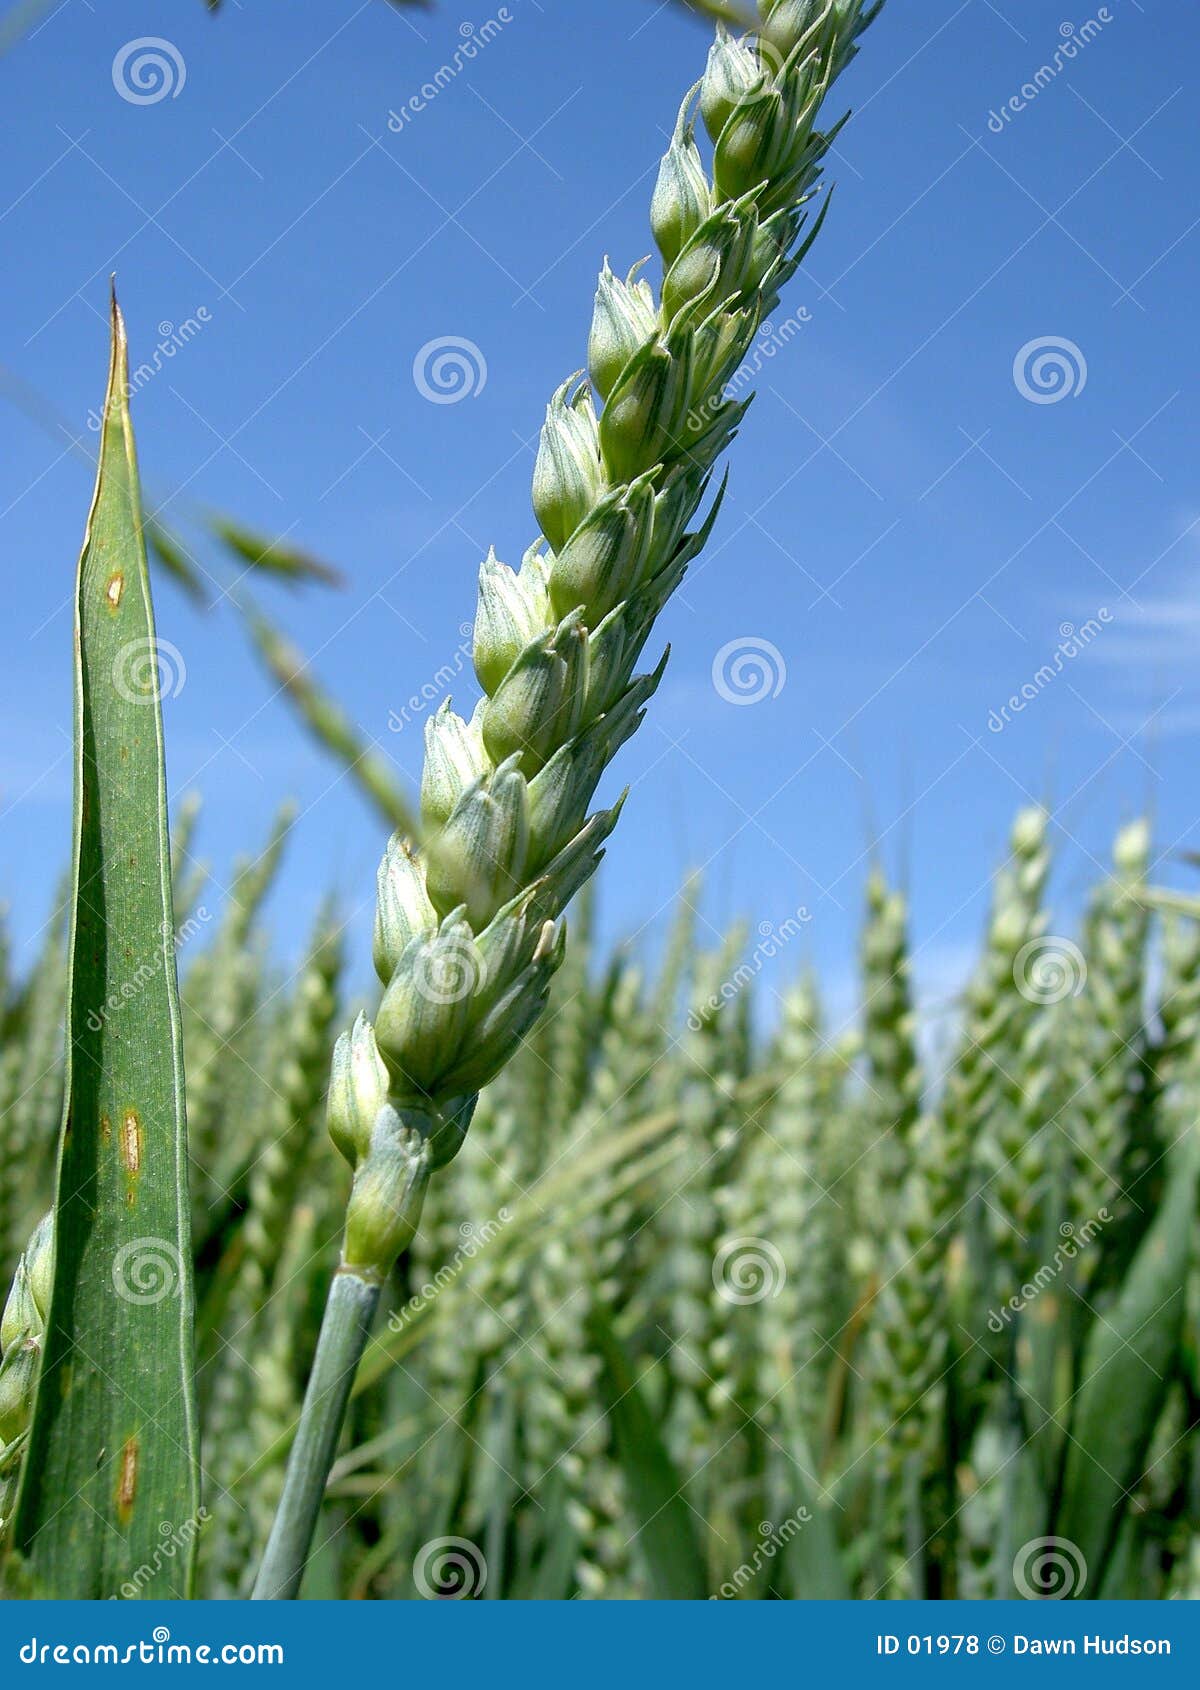 cereal crops